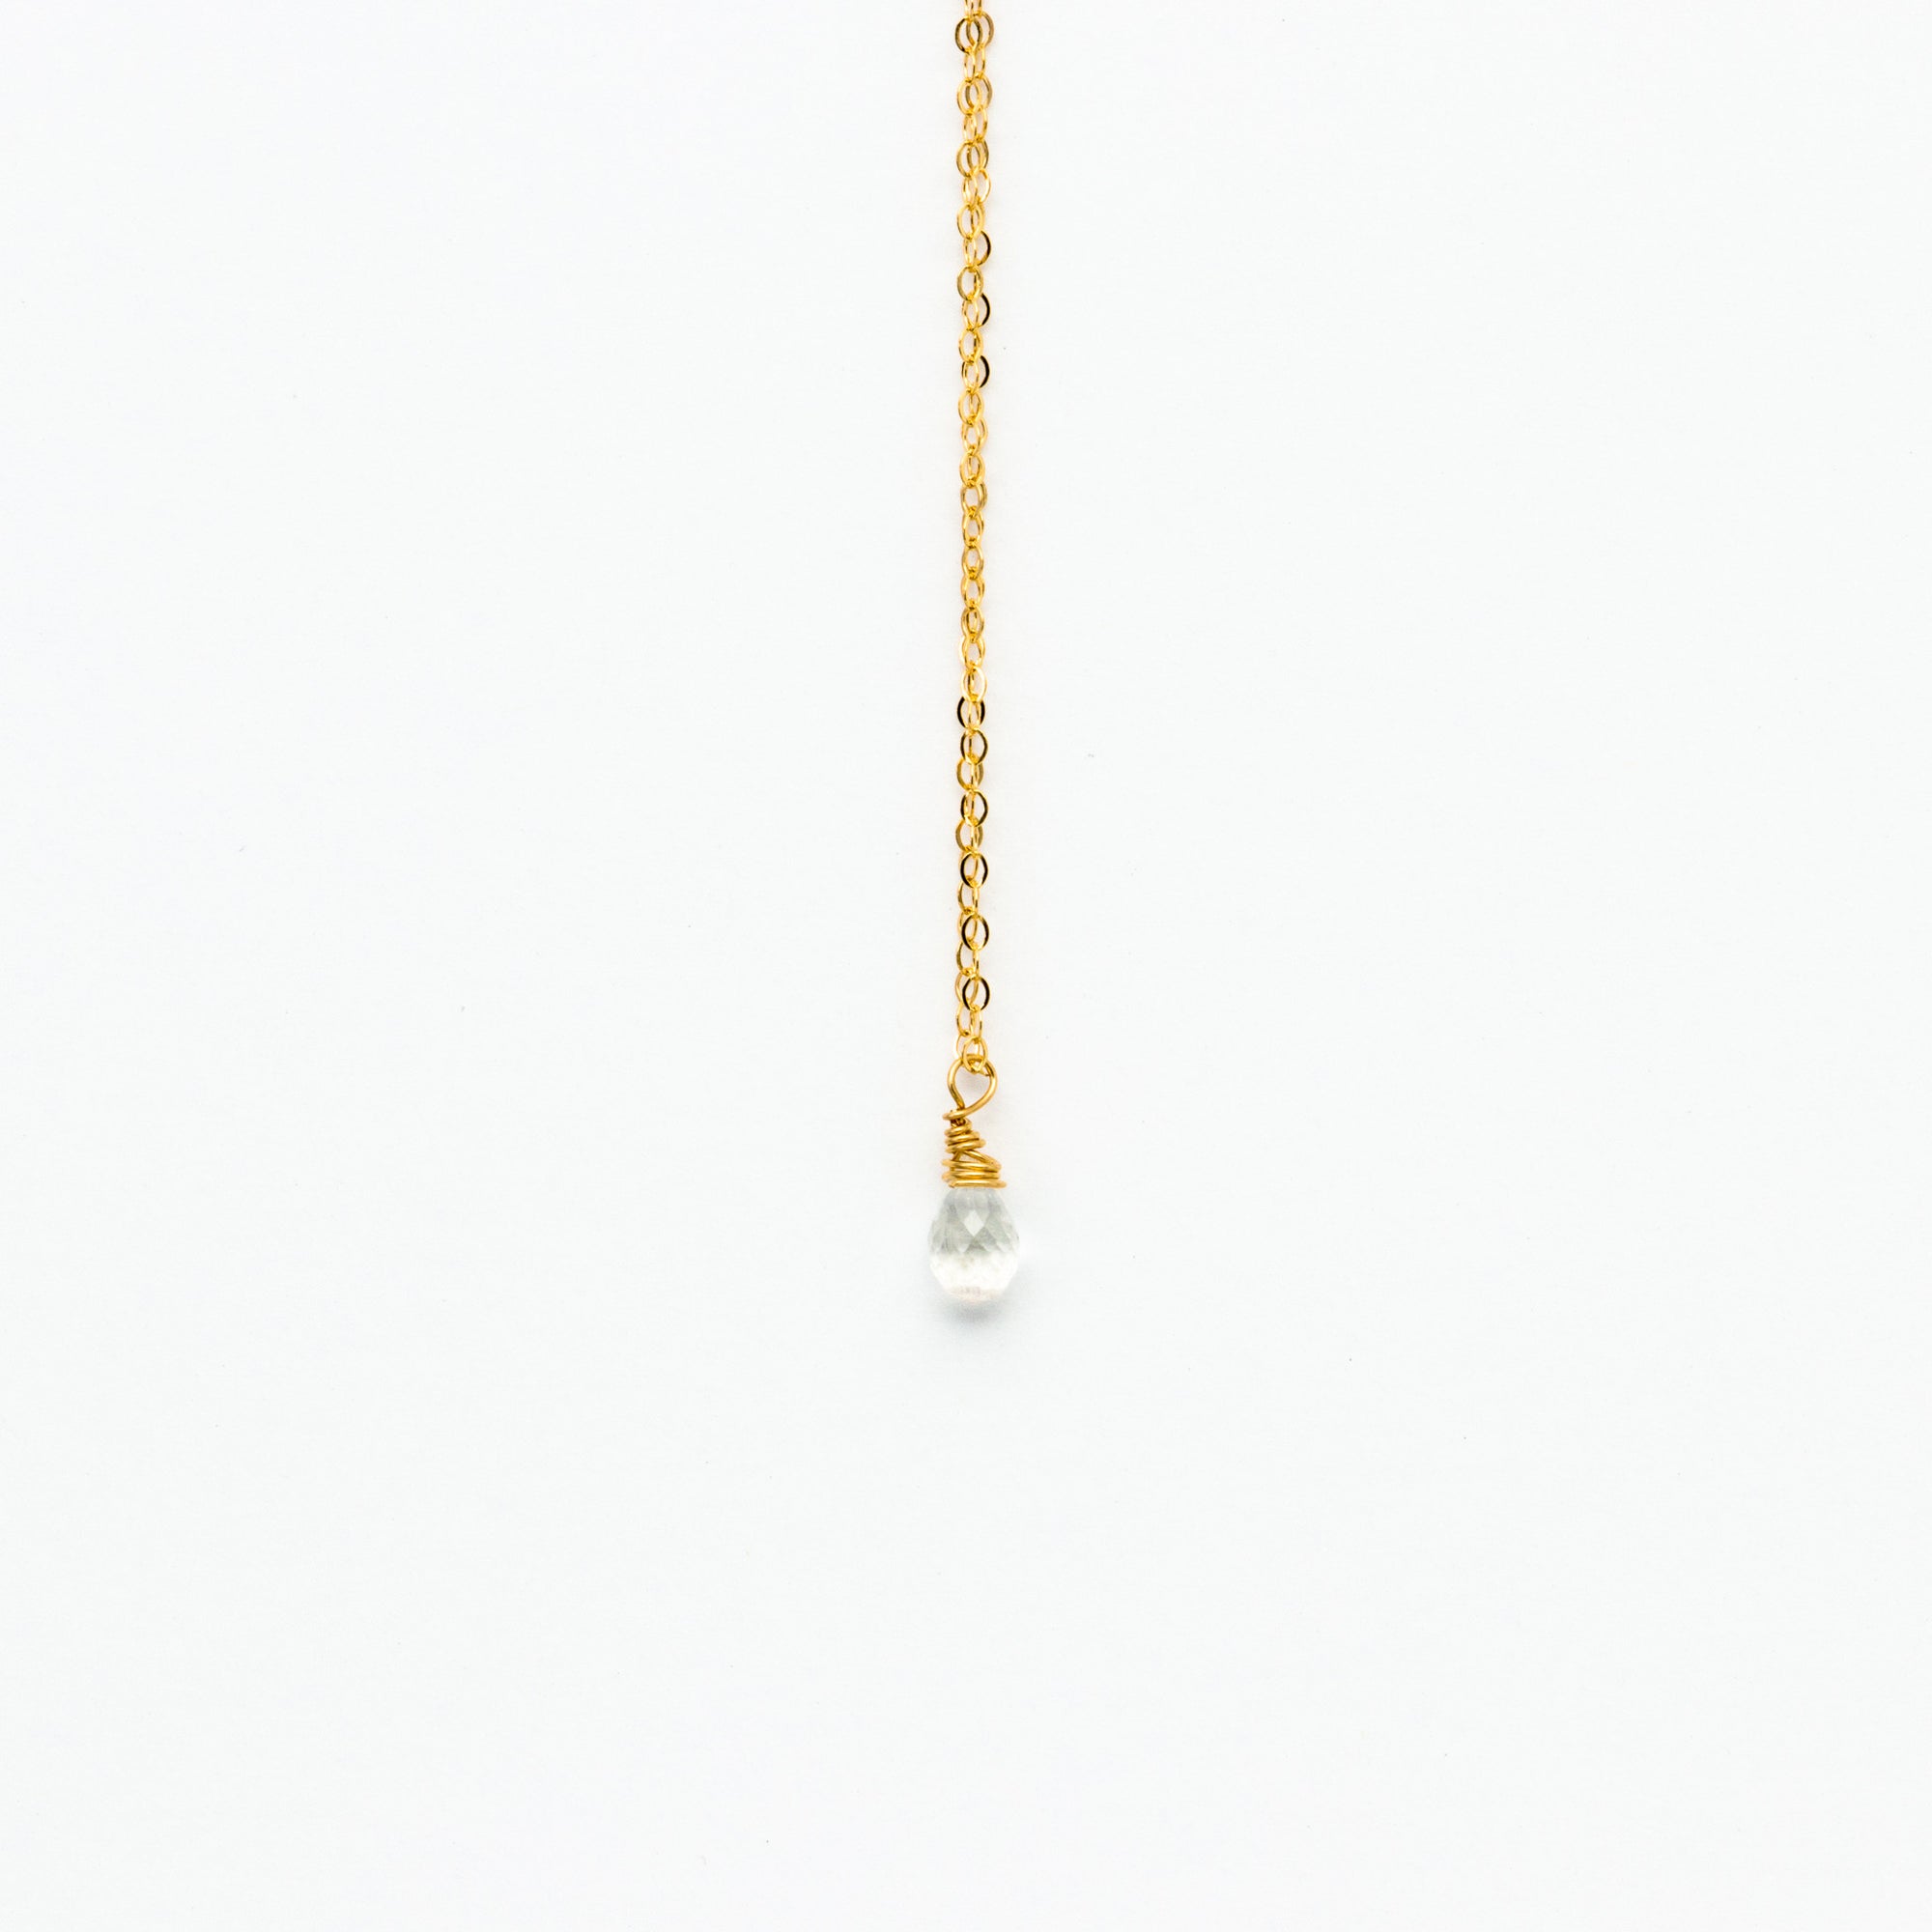 Lhamo - White Topaz teardrop necklace